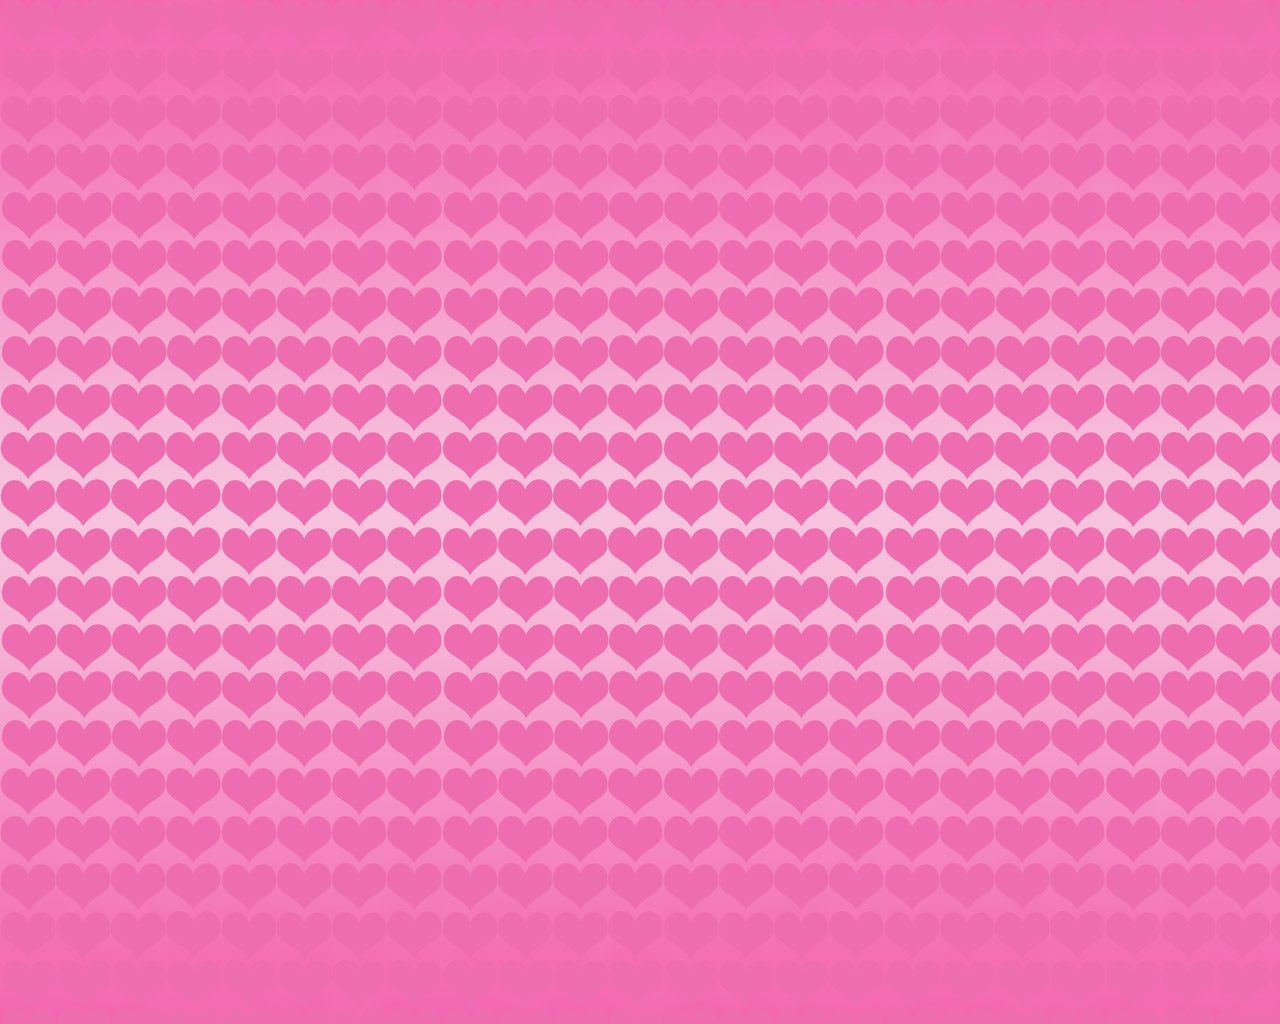 Free download Girly Patterns Background Pink desktop wallpaper pattern [1280x1024] for your Desktop, Mobile & Tablet. Explore Girly Pattern Wallpaper. Cool Girly Wallpaper, Girly Pink Wallpaper, Cute Girly Pattern Wallpaper